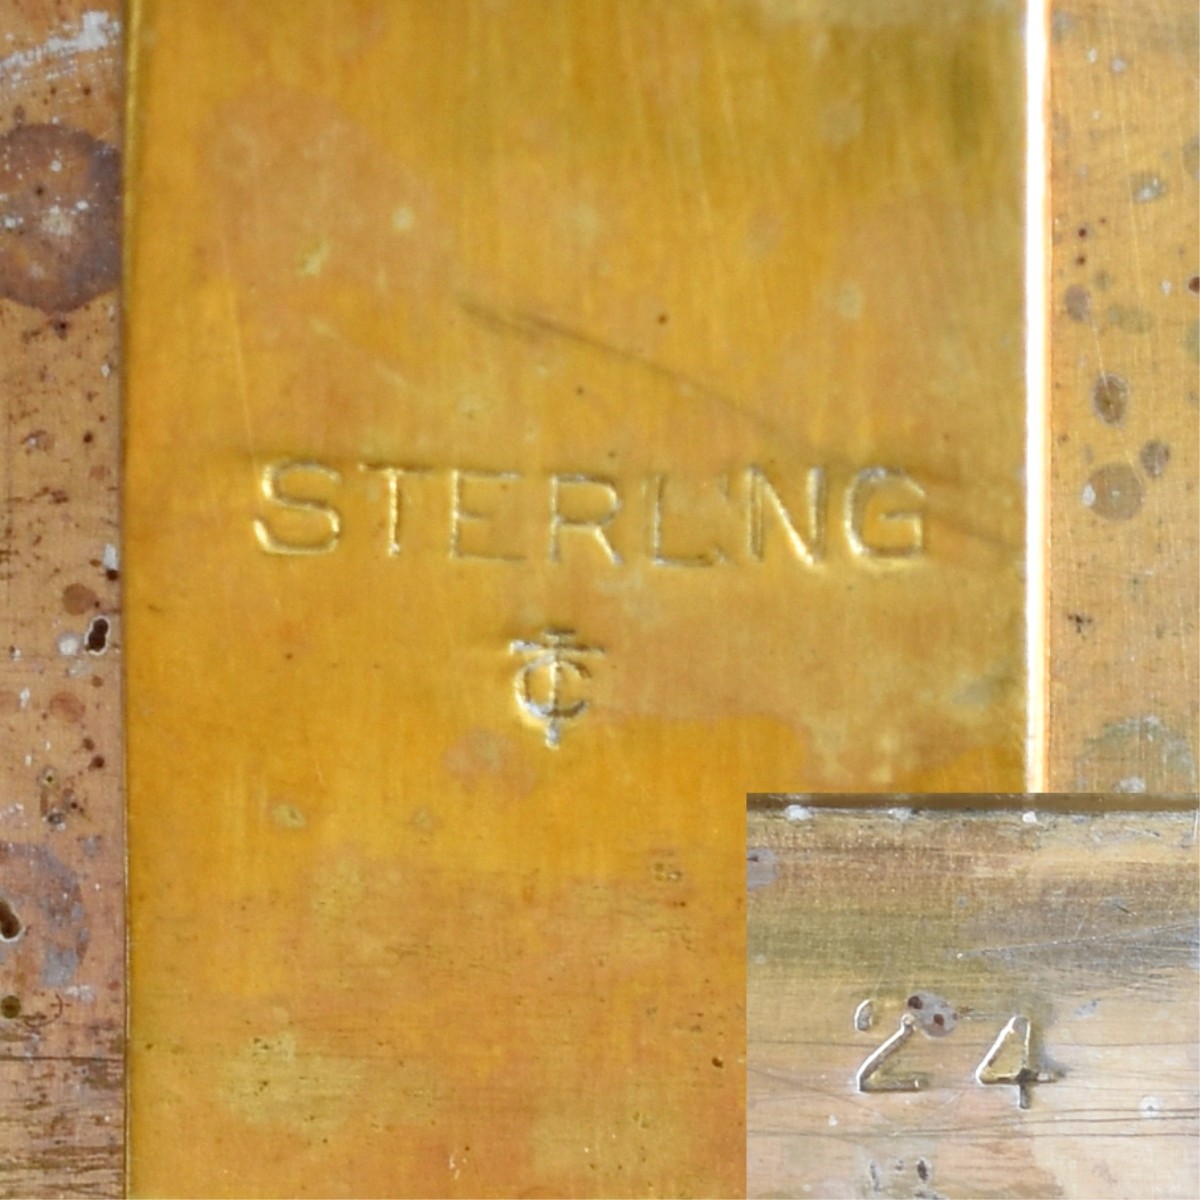 Sterling Silver Cigarette Case - Image 4 of 4